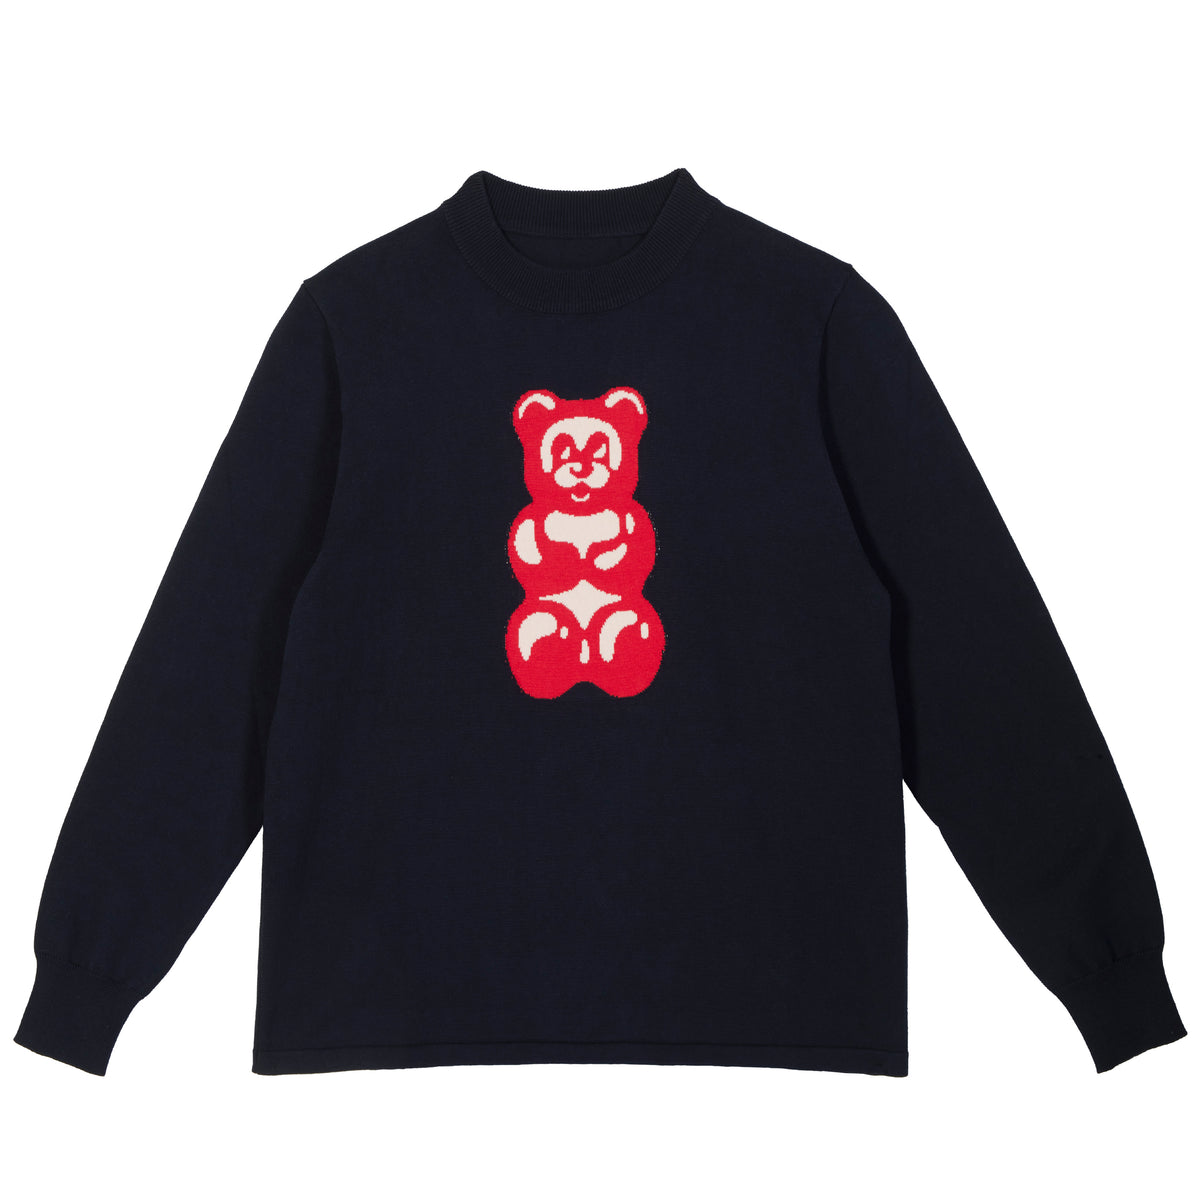 Gummy Bear Knit Sweater - Red